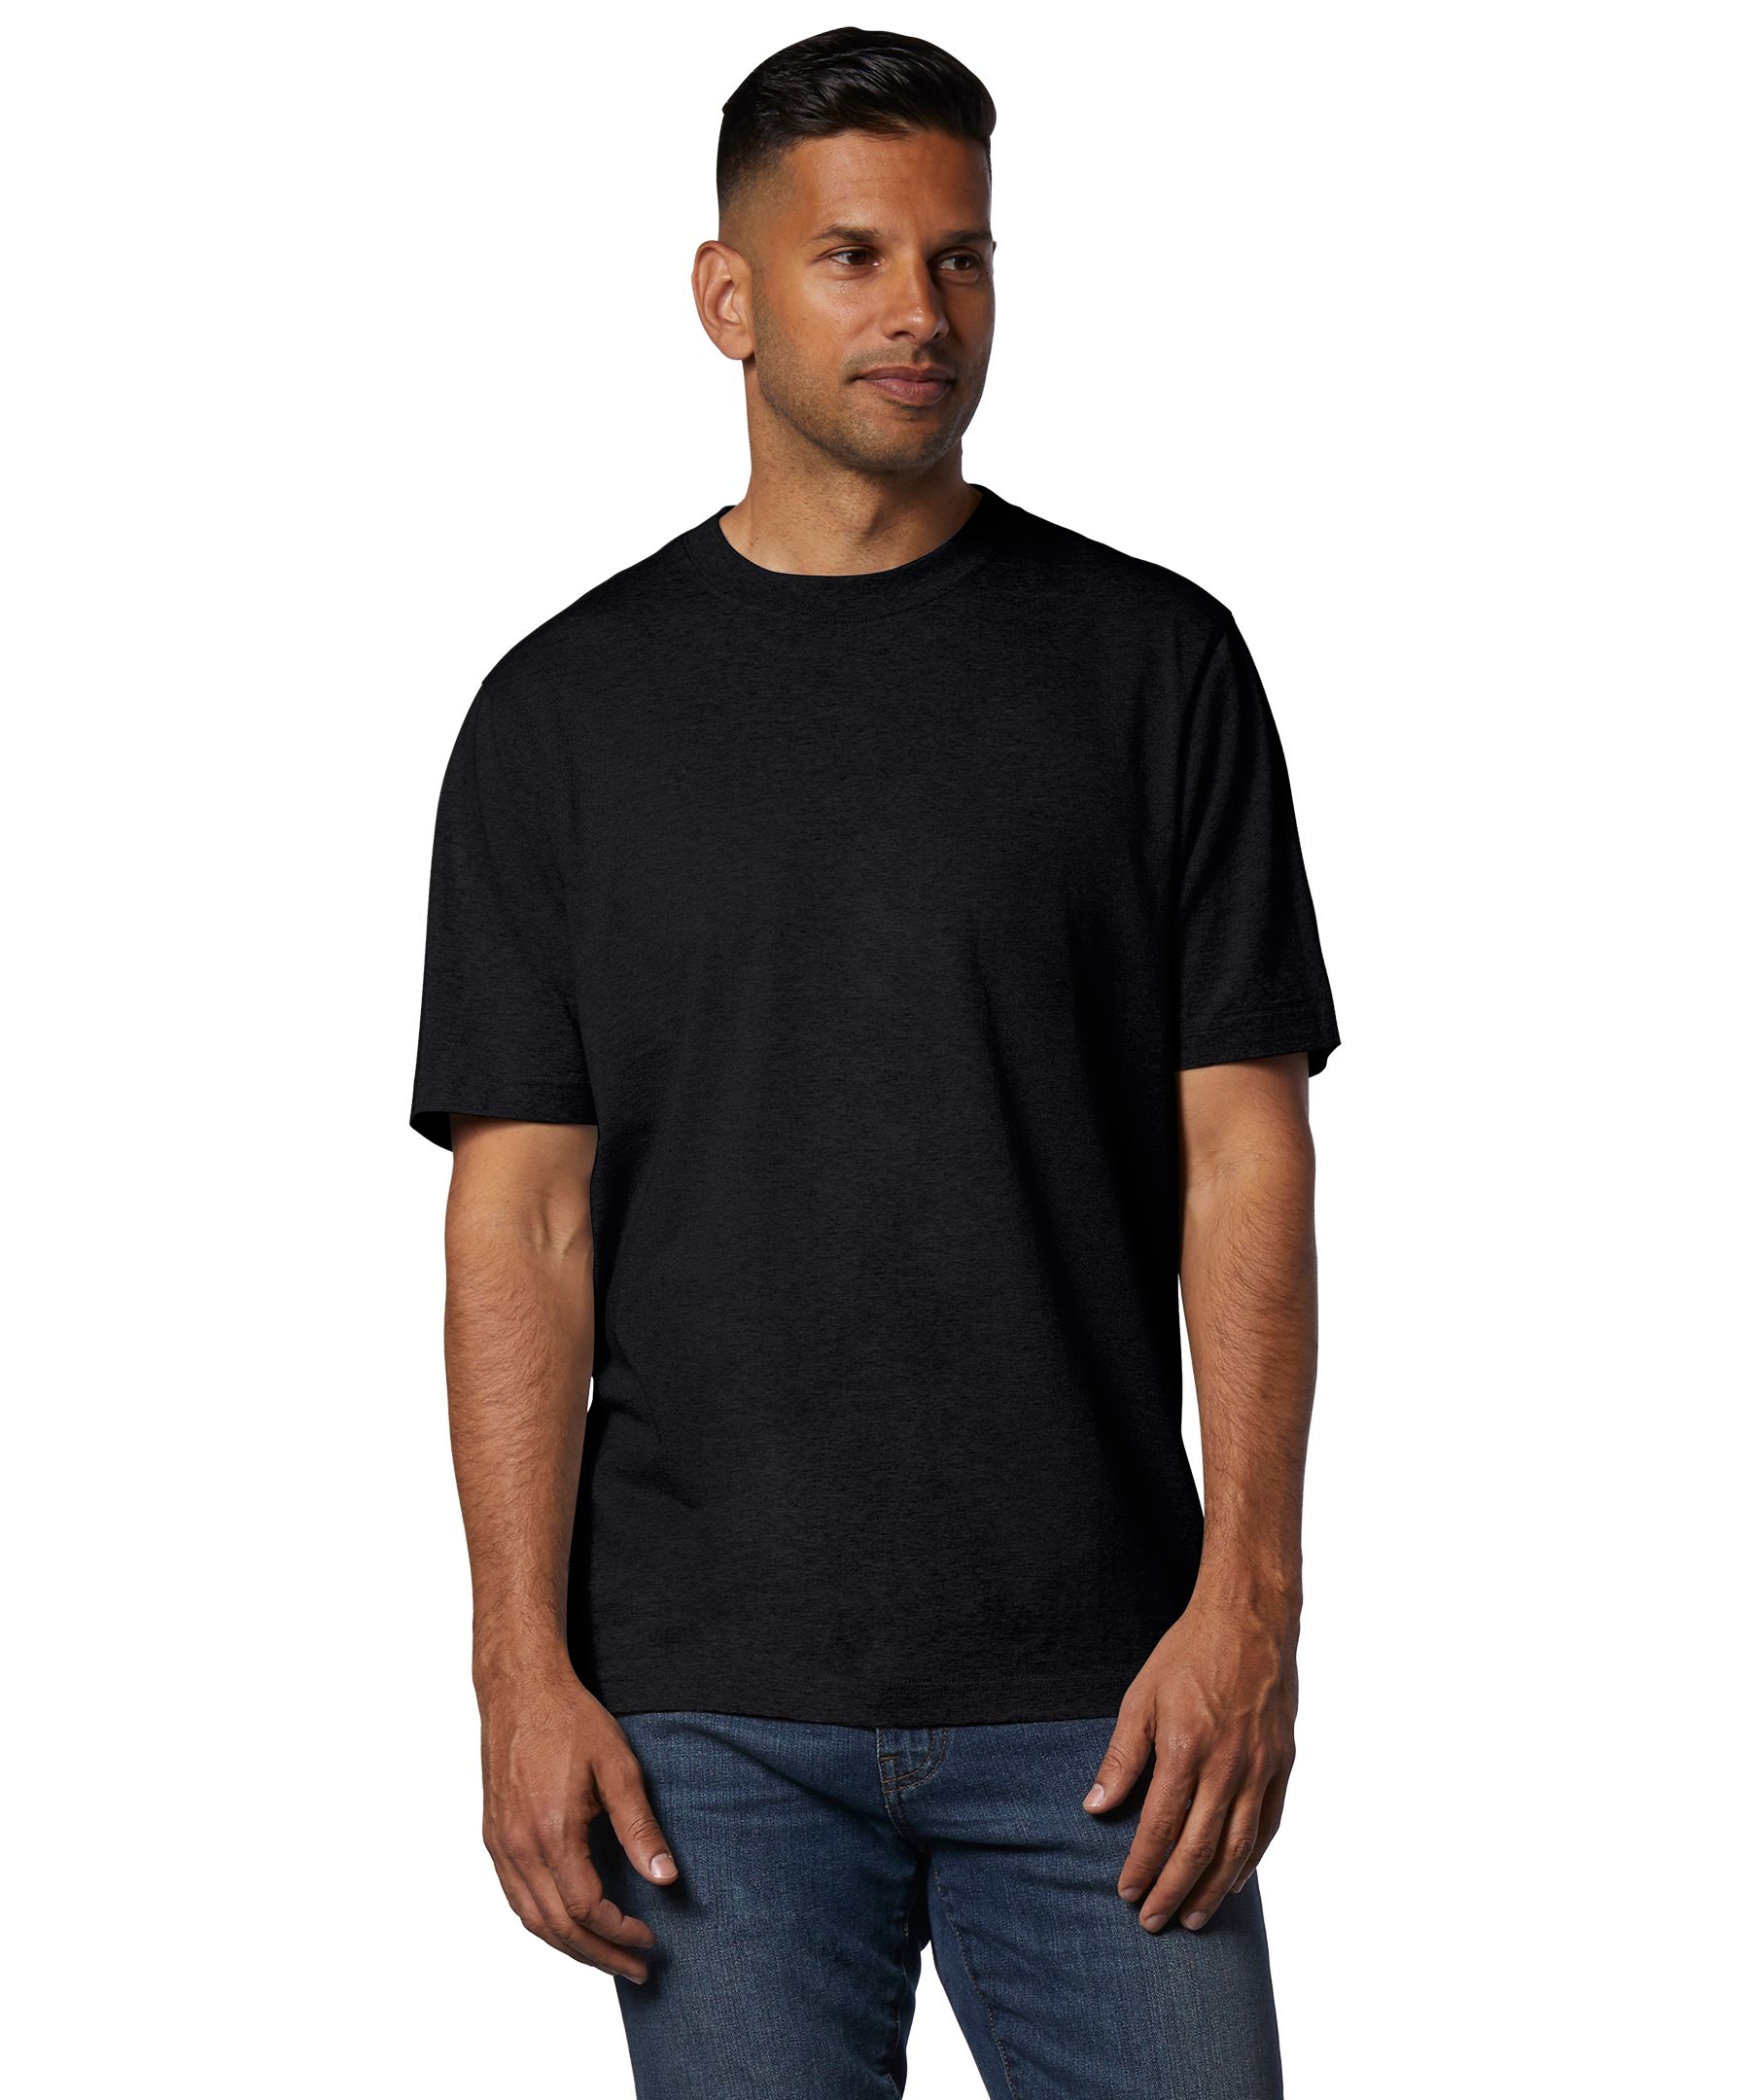 Hanes Originals Short Sleeve Cotton Men's T-Shirt